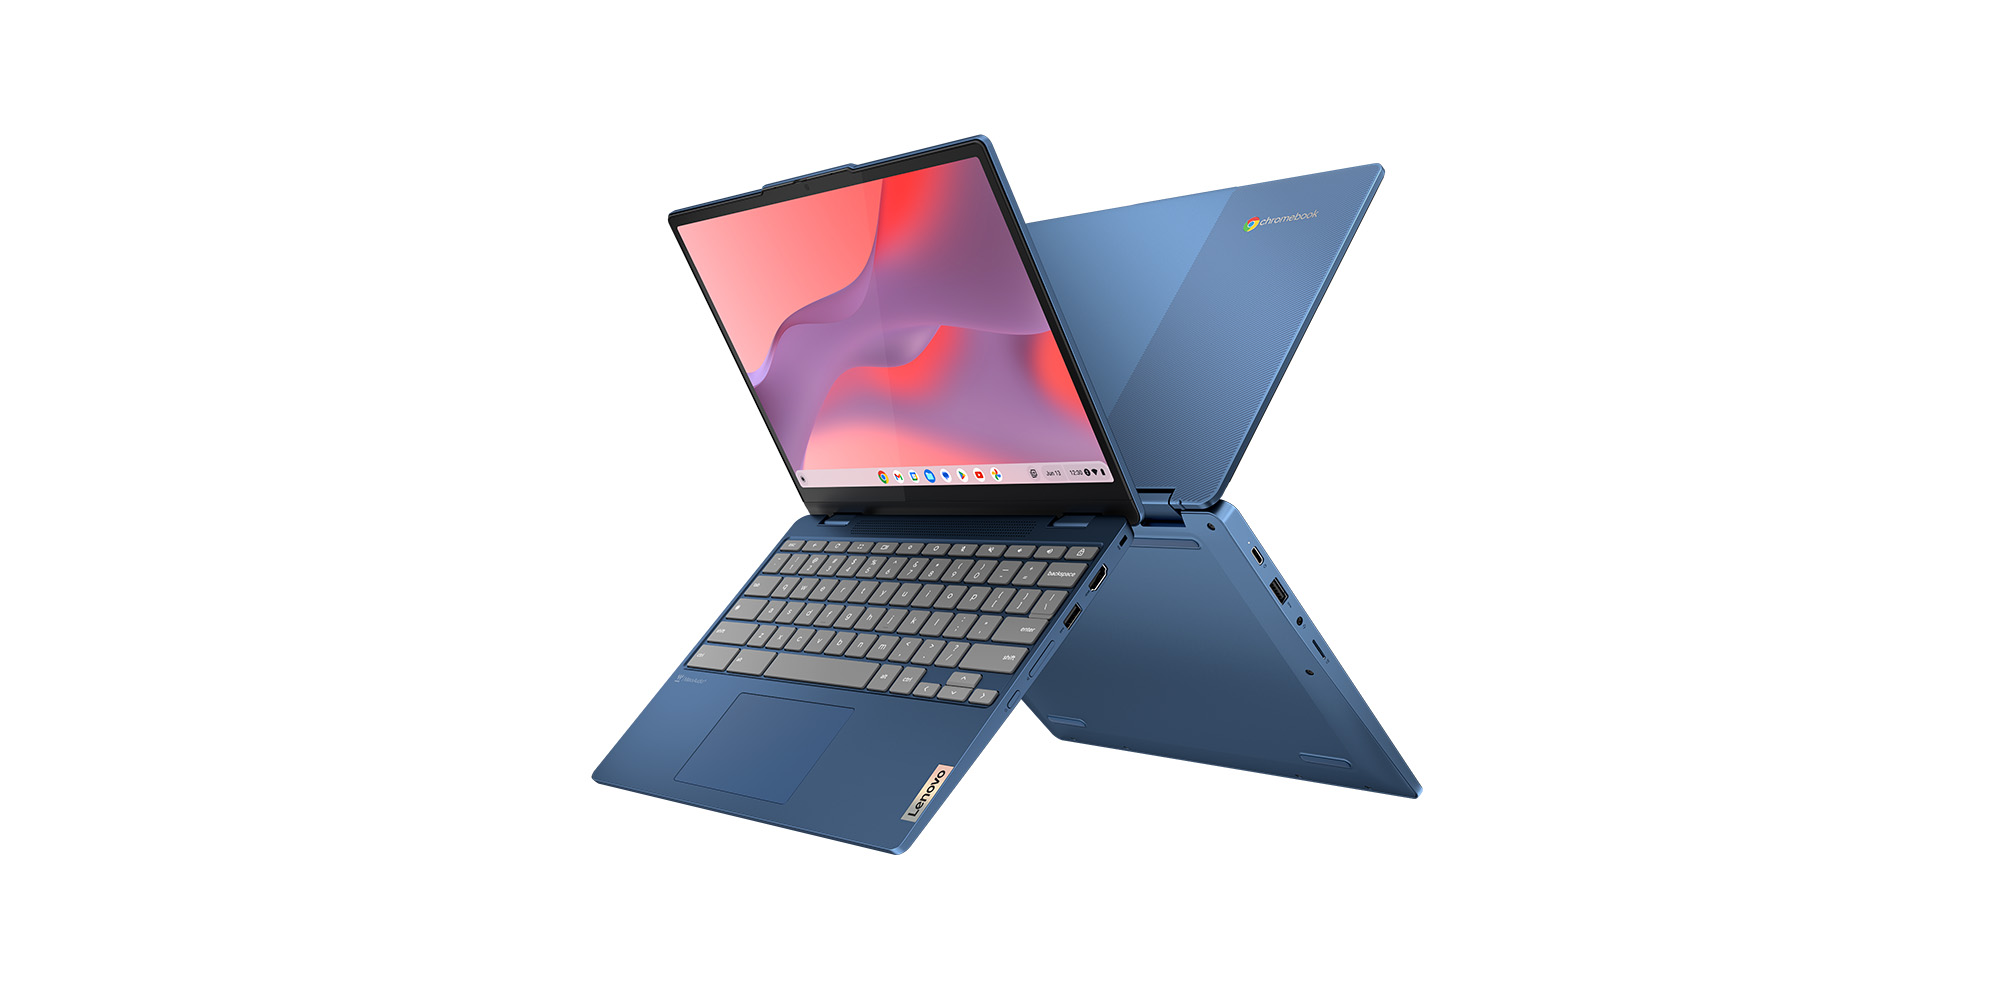 Lenovo IdeaPad 3i Flex Chromebook looks like a winner